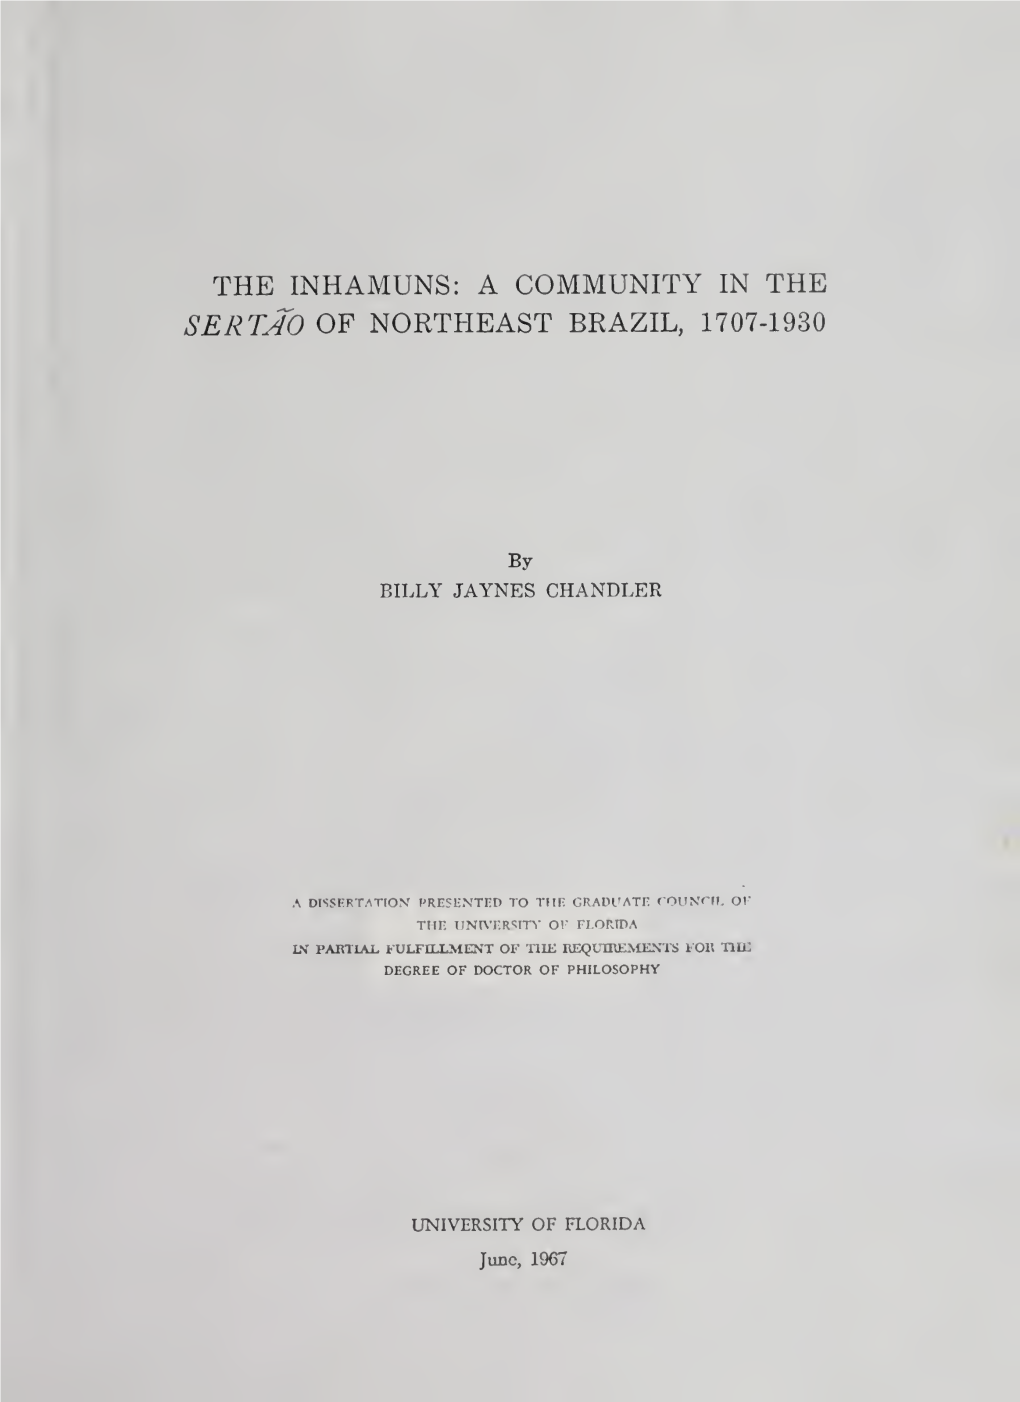 The Inhamuns: a Community in the Sertao of Northeast Brazil, 1707-1930